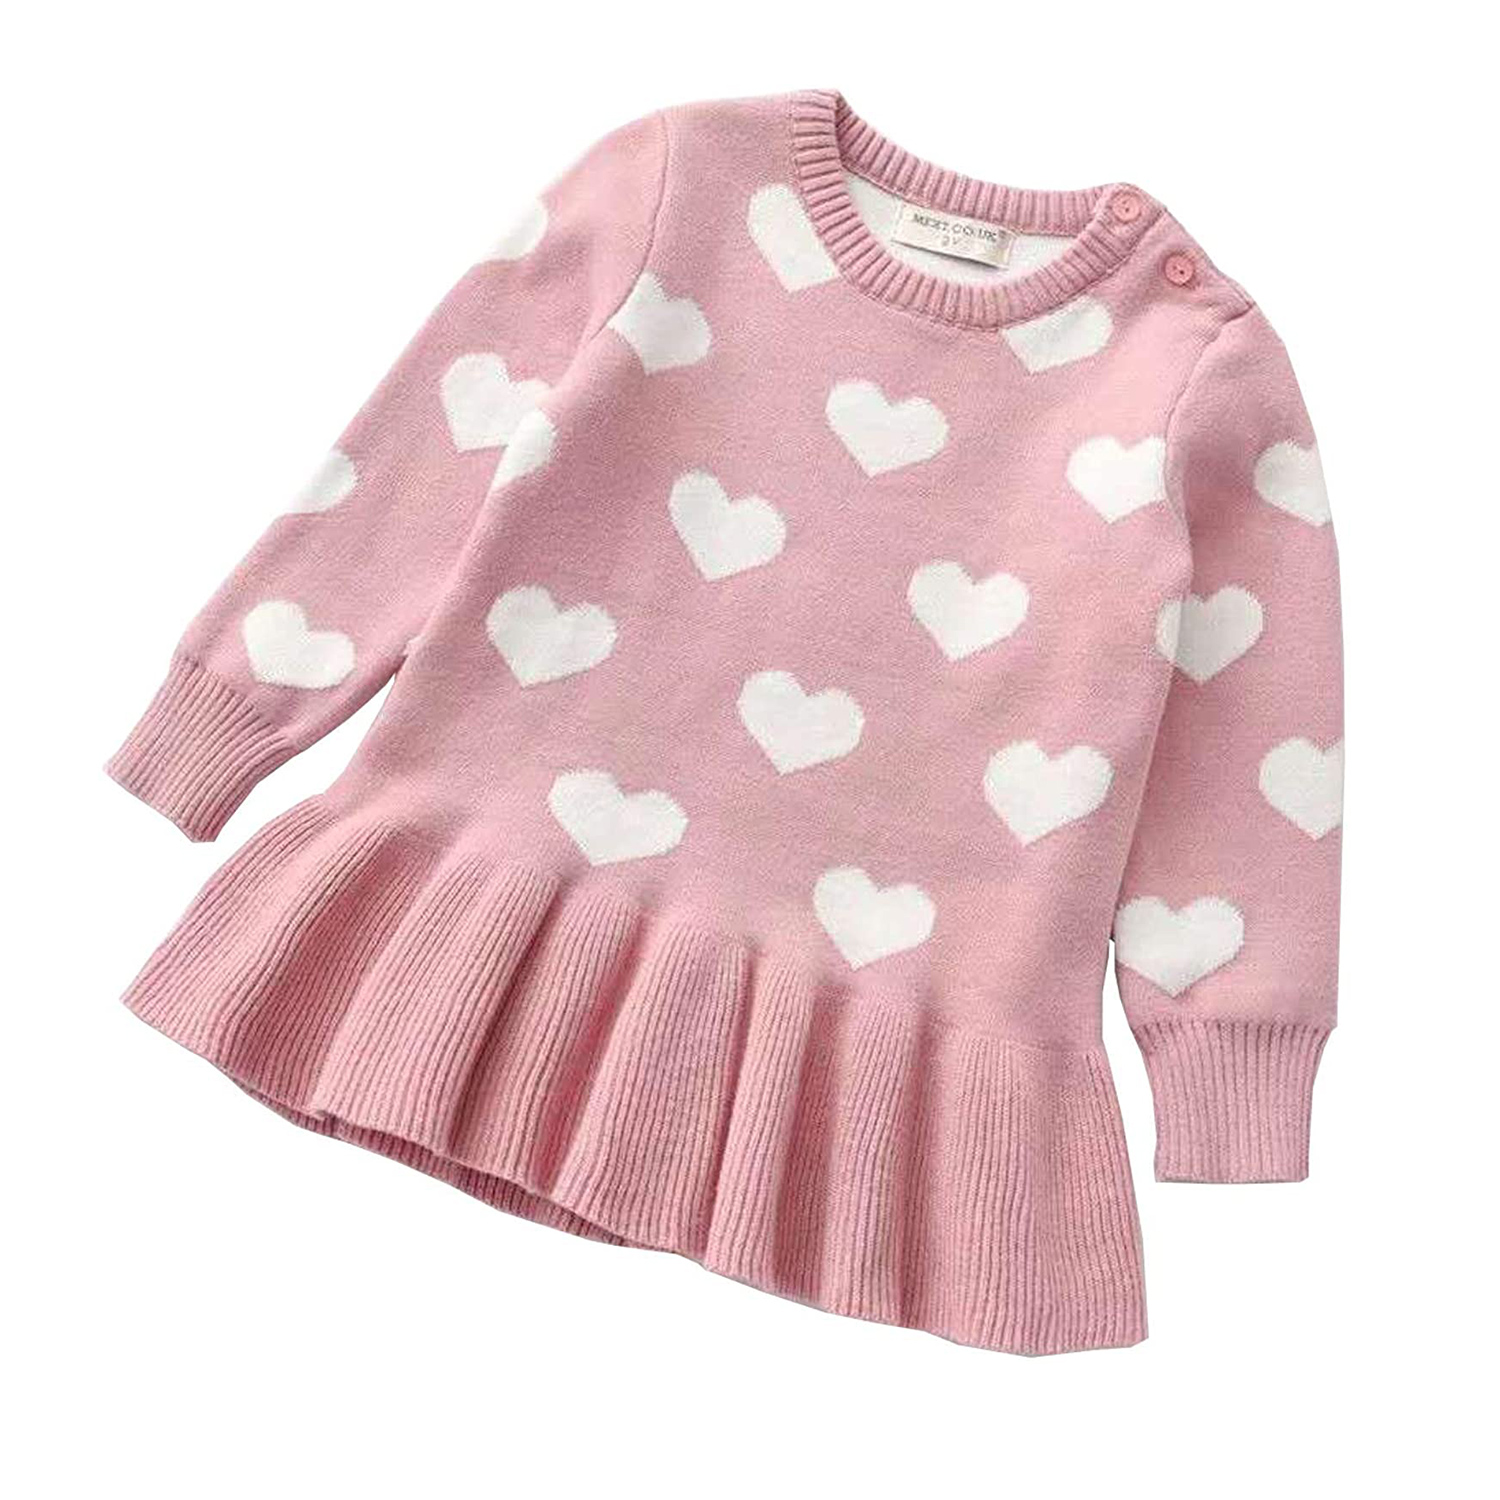 Wallarenear Toddler Baby Girl Valentine Dress 